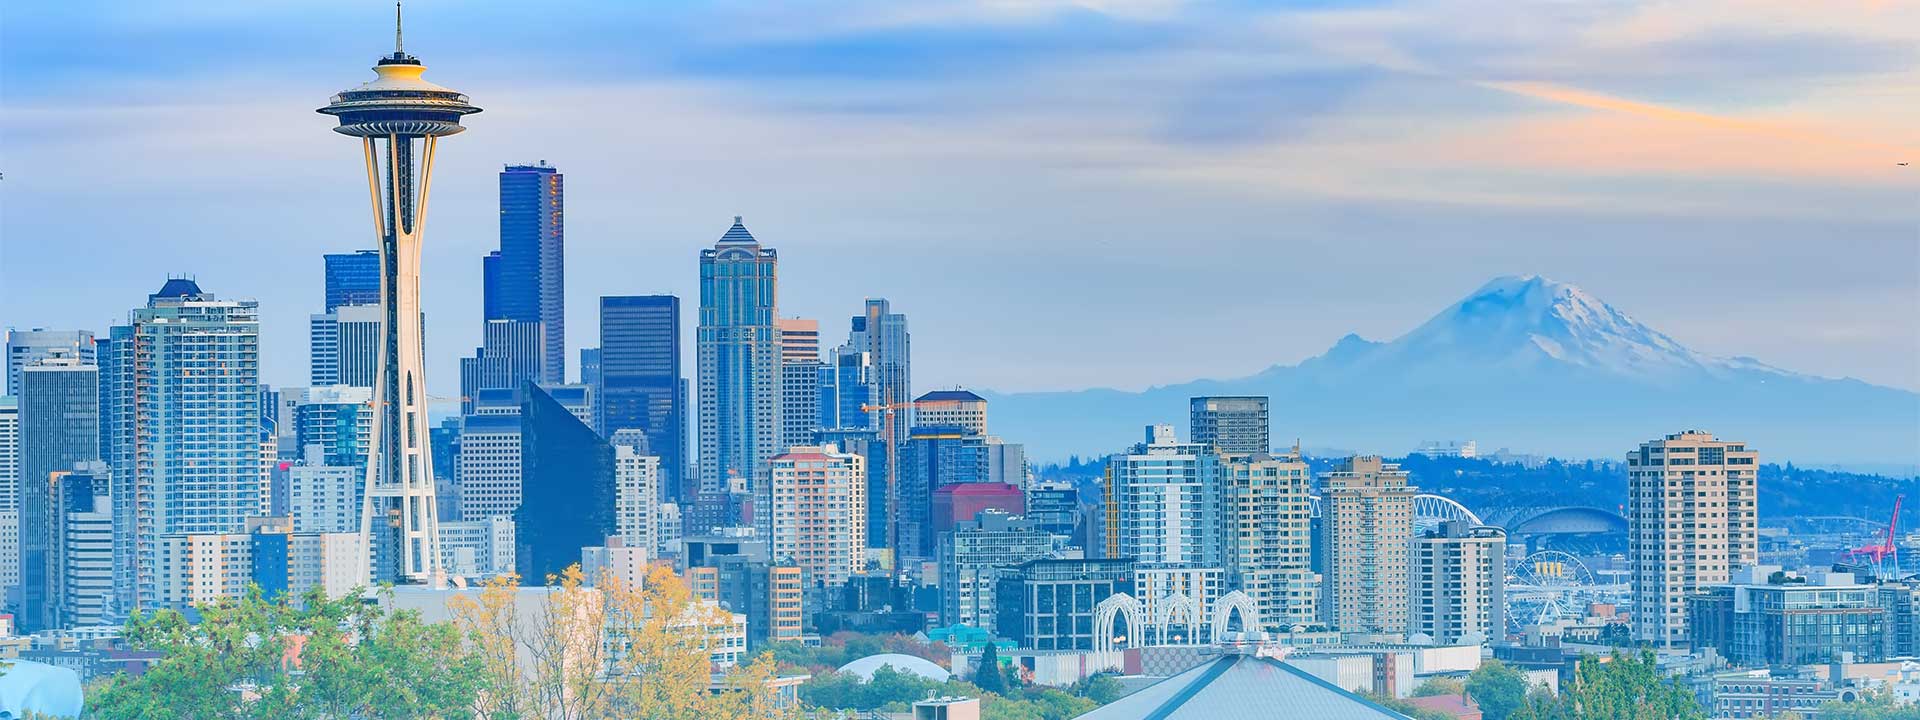 Skyline of Seattle, Washington